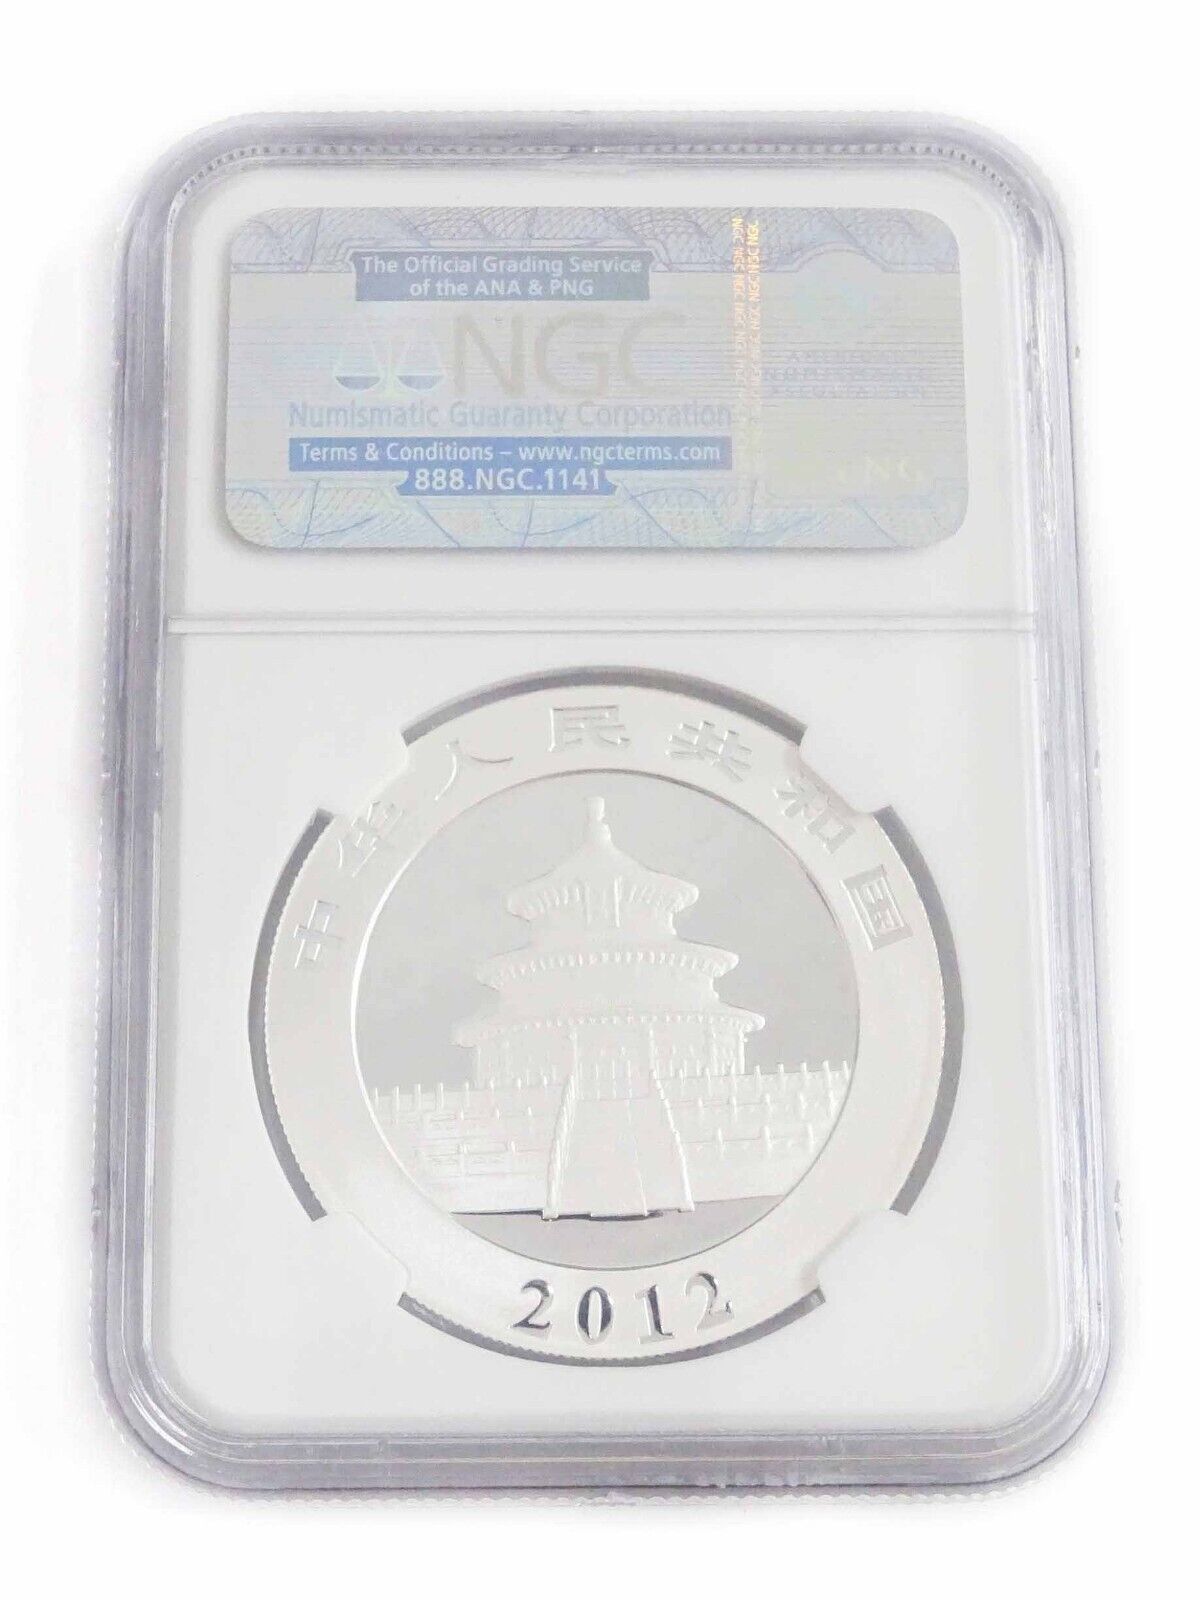 2012 China Silver Panda 10 Yuan 1 oz .999 Fine Silver NGC MS 69